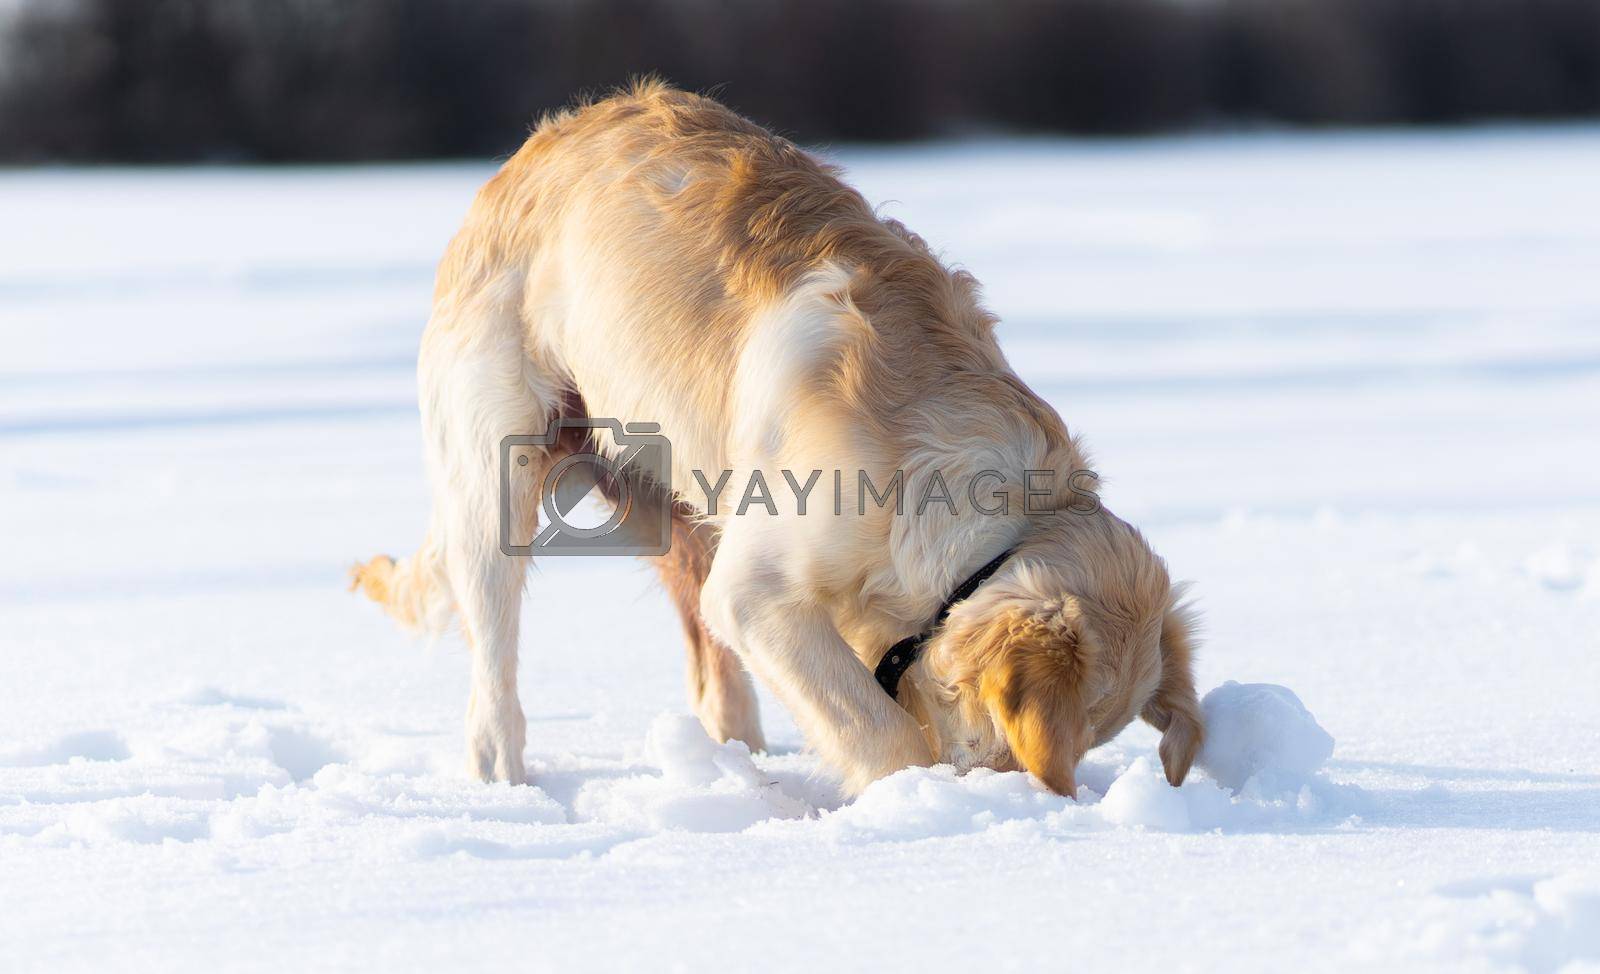 Royalty free image of Dog digging under snow by GekaSkr